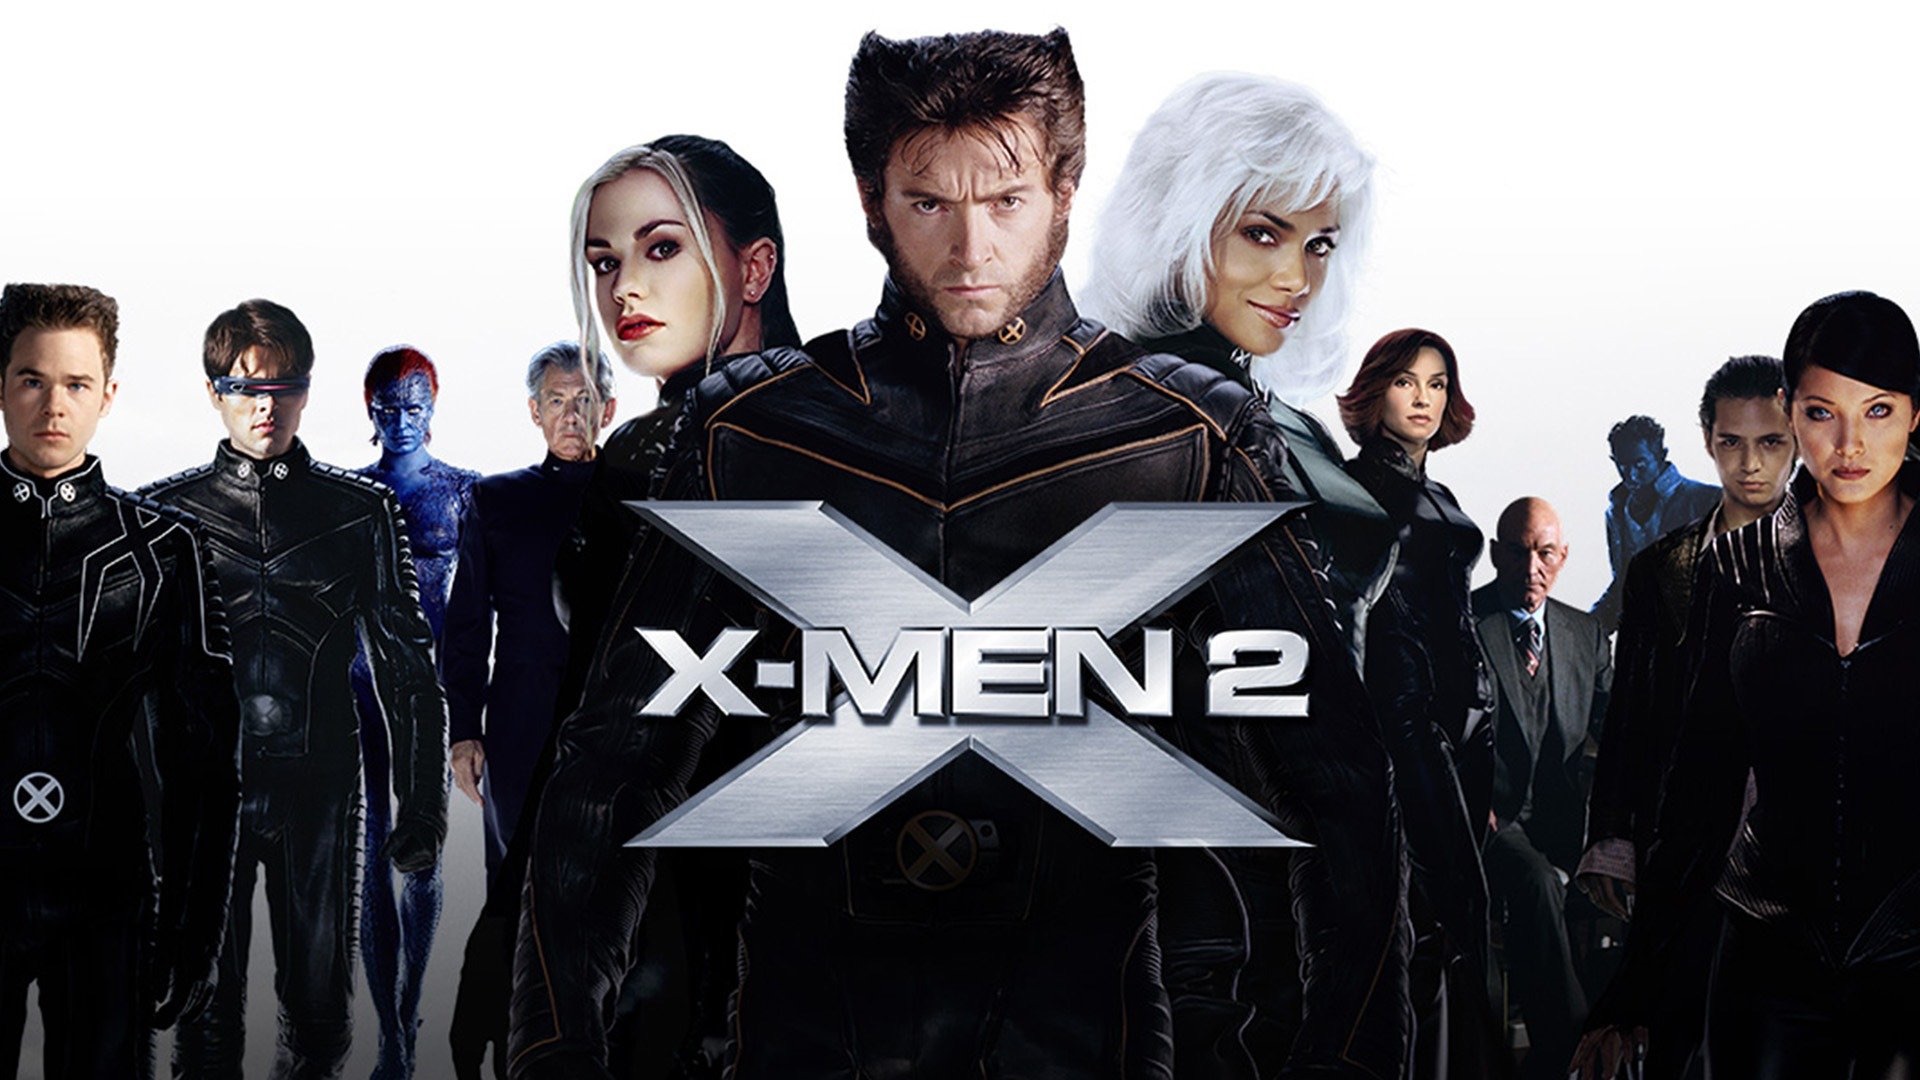 Movie X2 X Men United 1920x1080